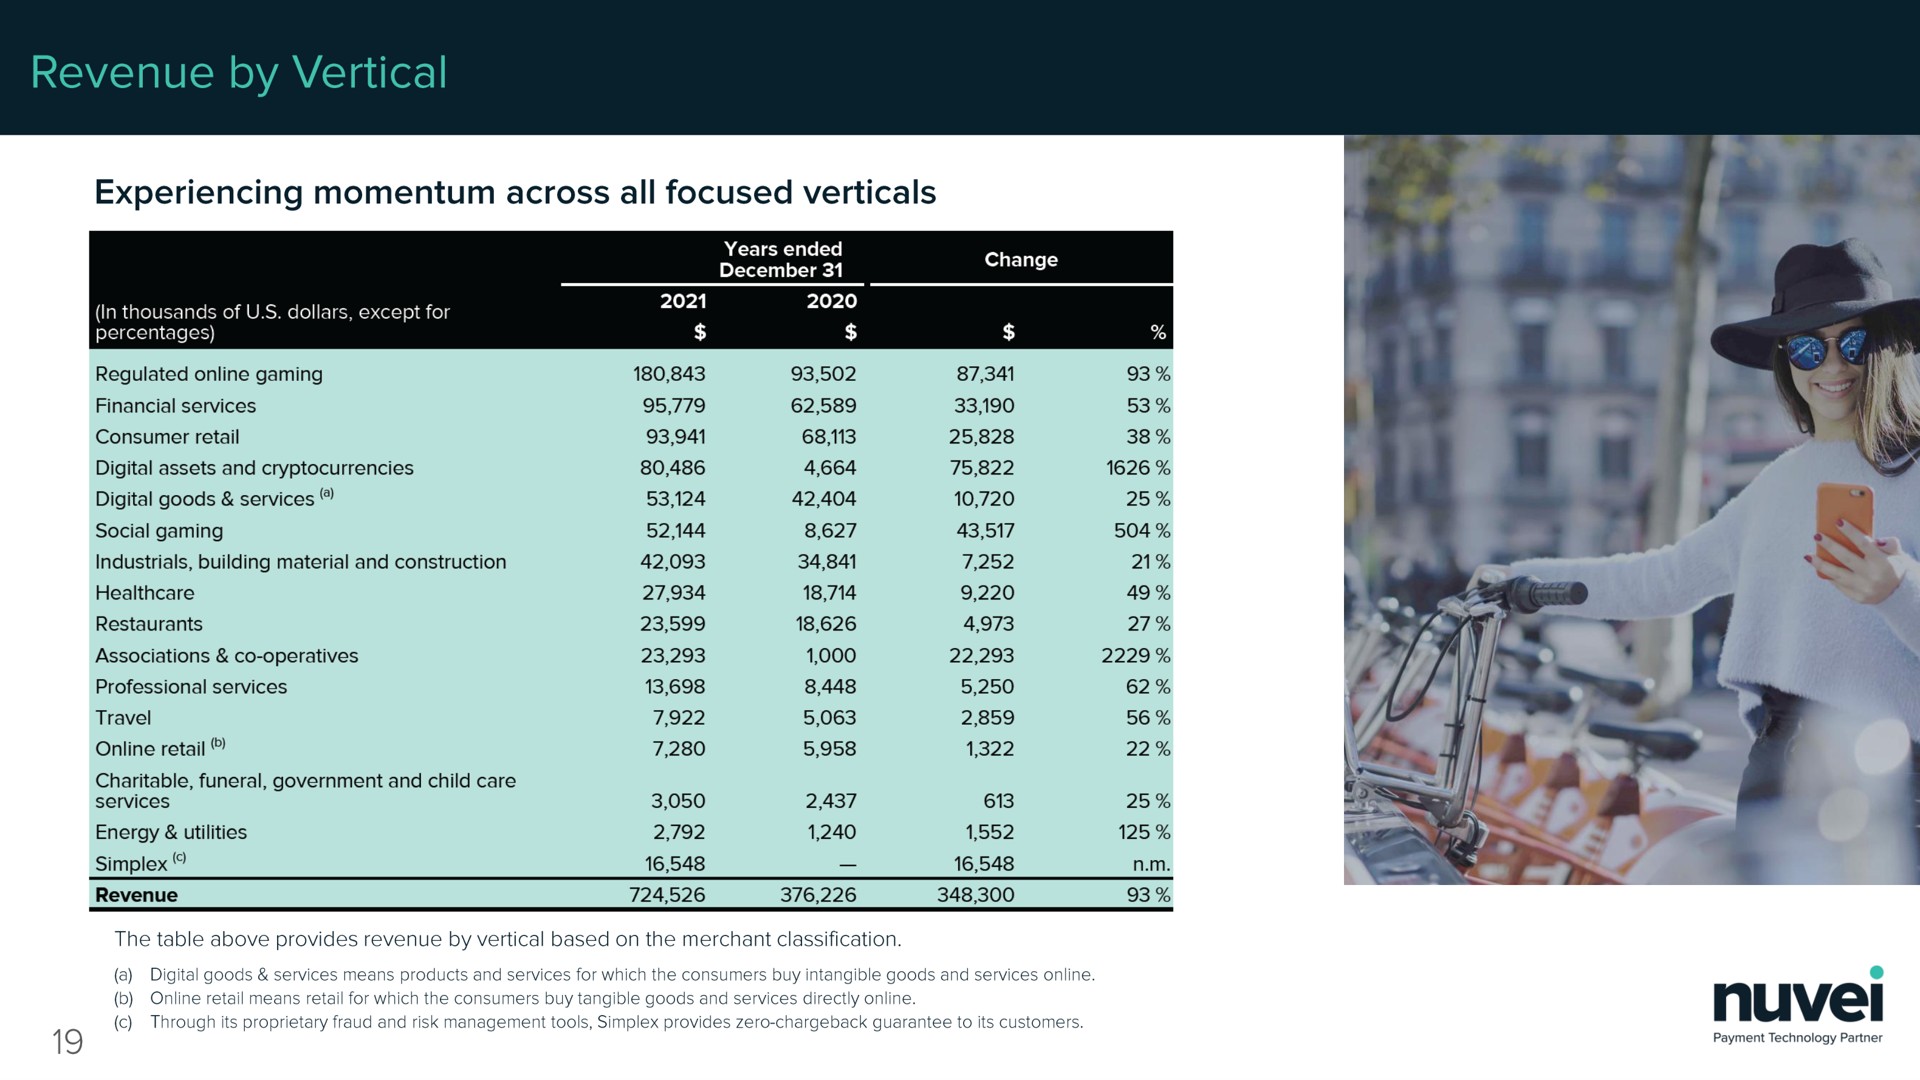 revenue by vertical experiencing momentum across all focused verticals | Nuvei